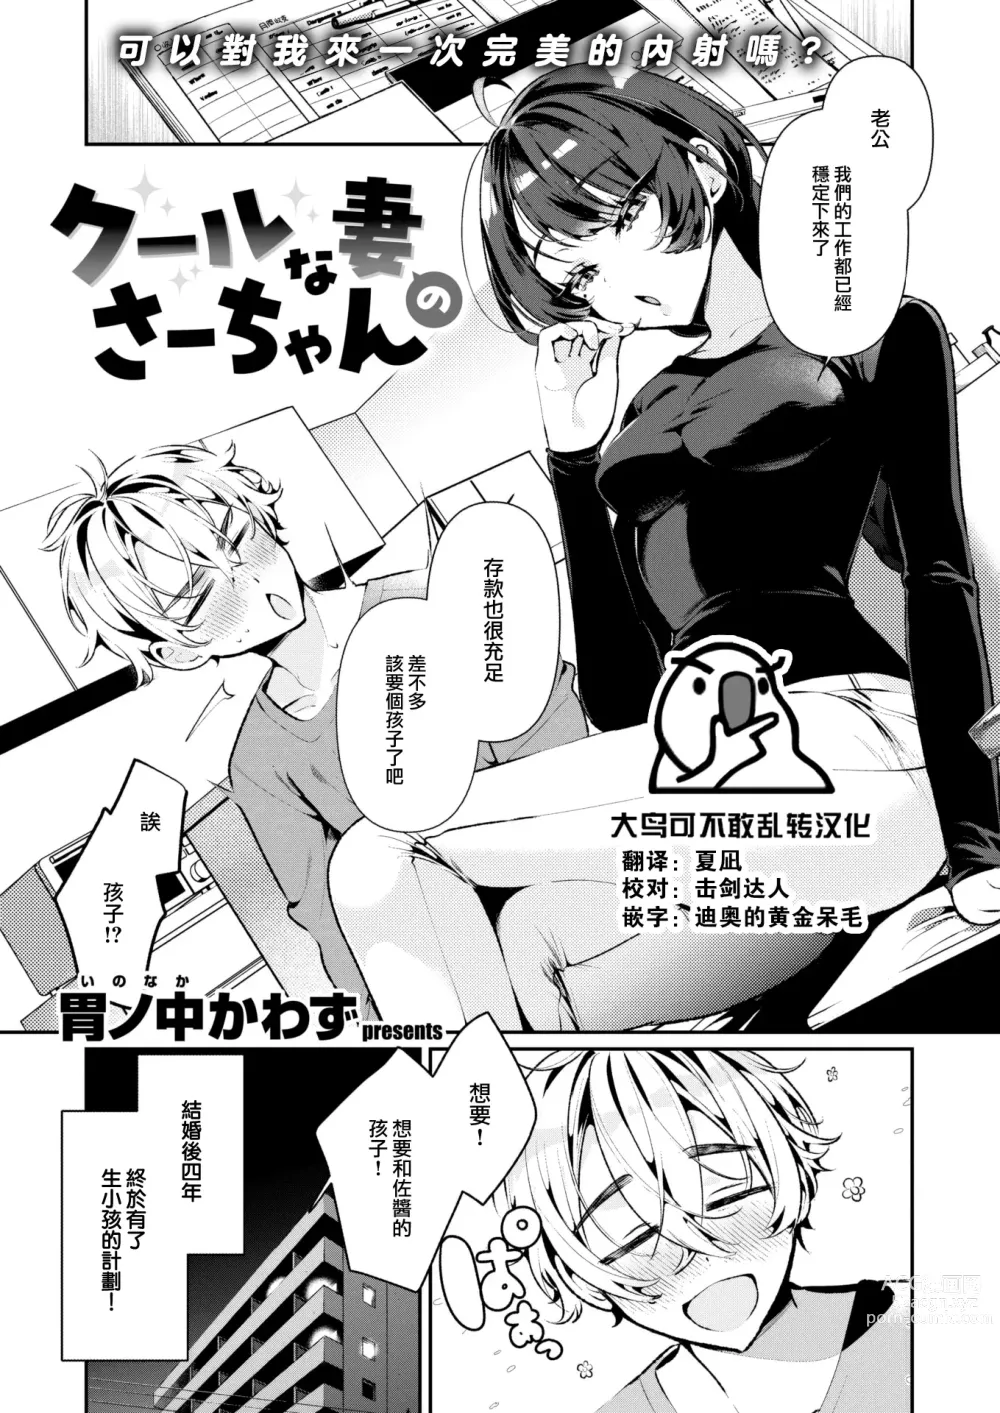 Page 2 of manga Cool na Tsuma no Sa-chan